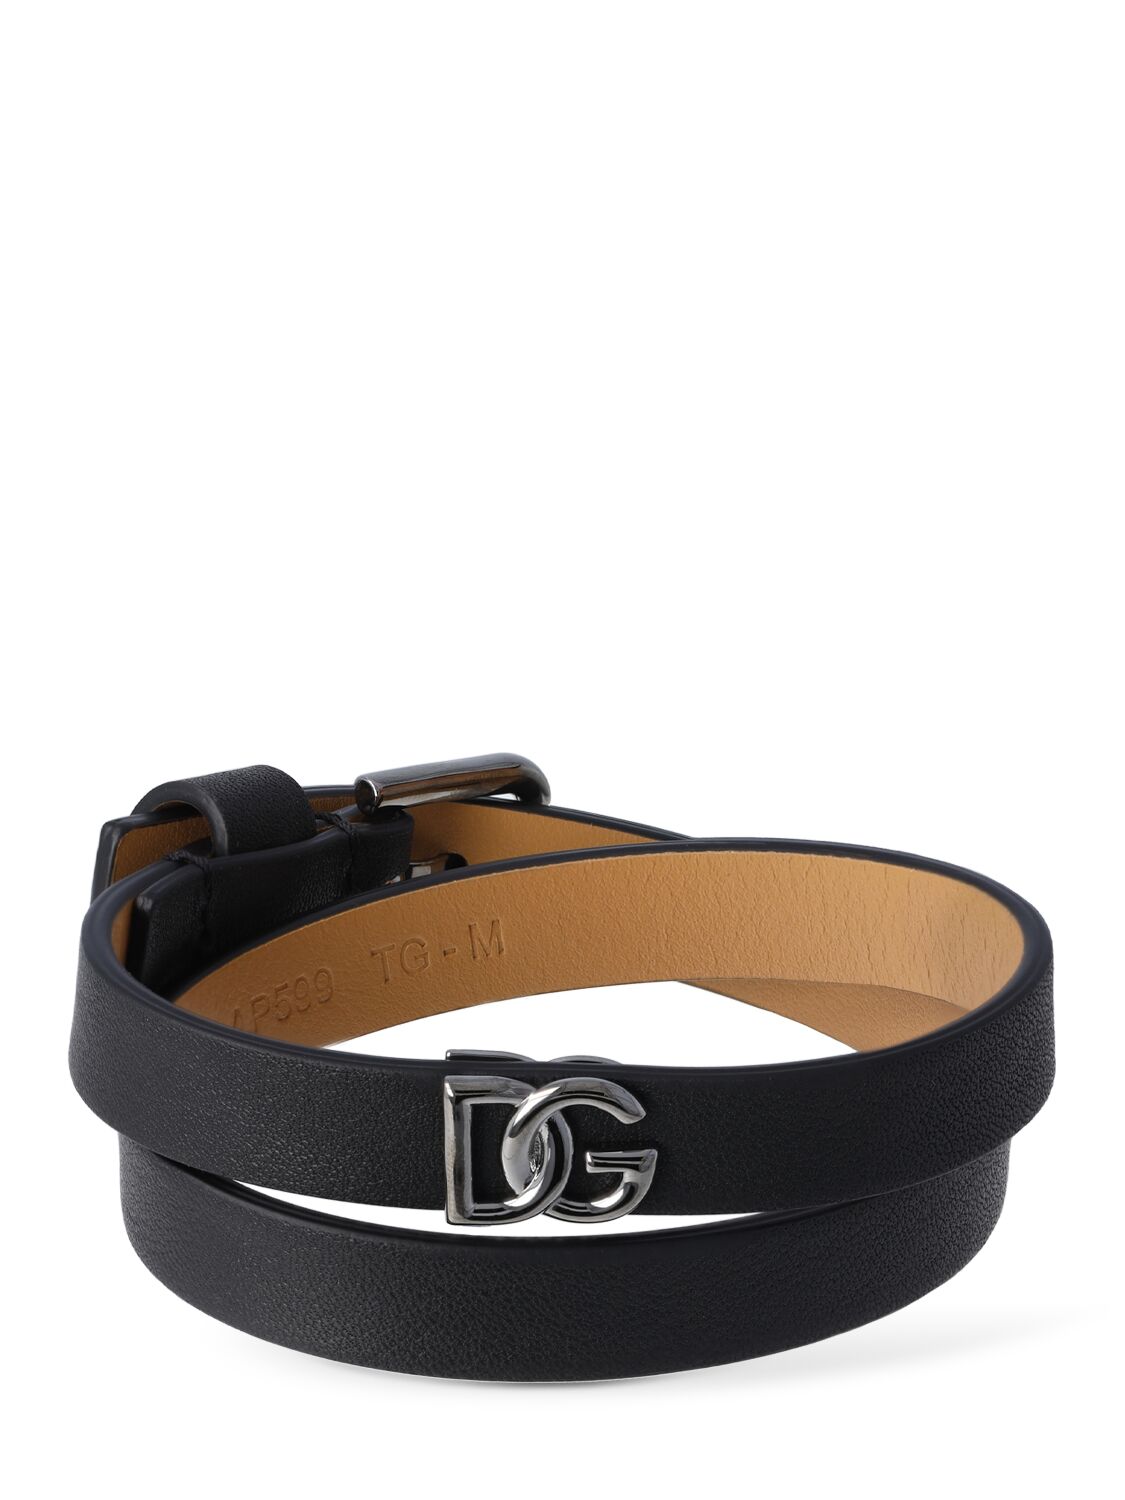 Image of Dg Logo Double Wrap Leather Bracelet